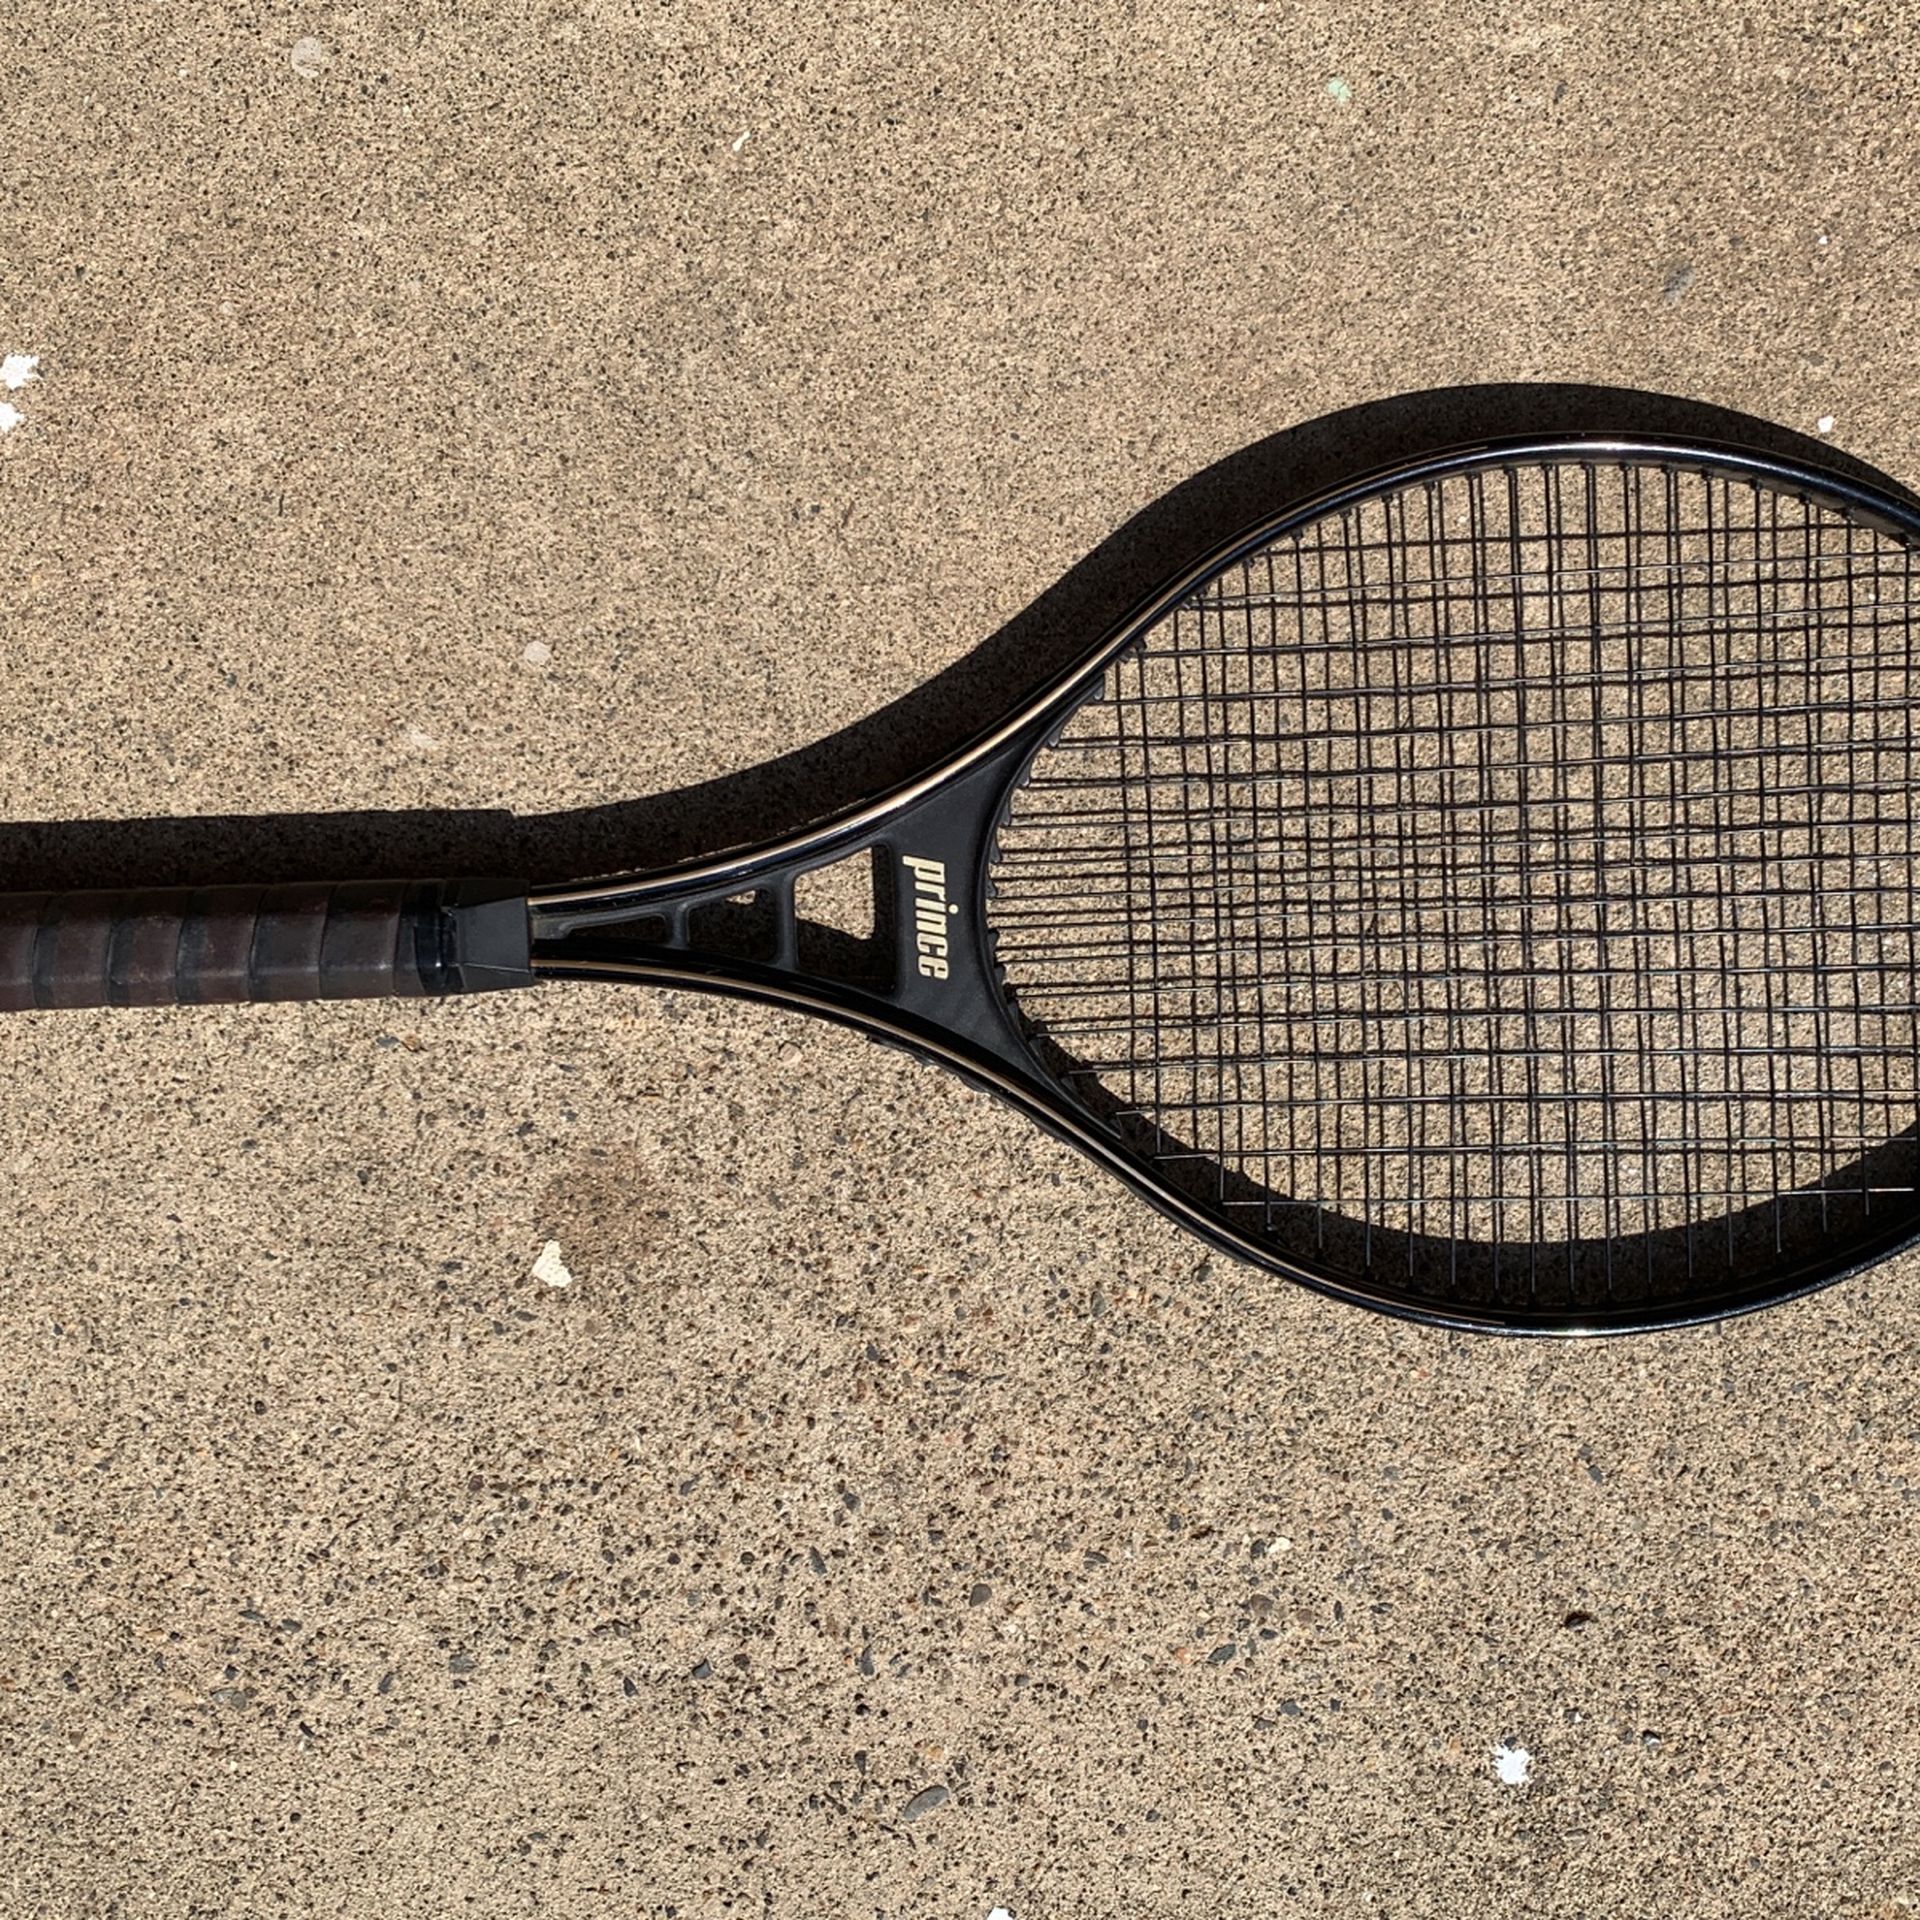 Tennis Racket 4 5/8 Prince